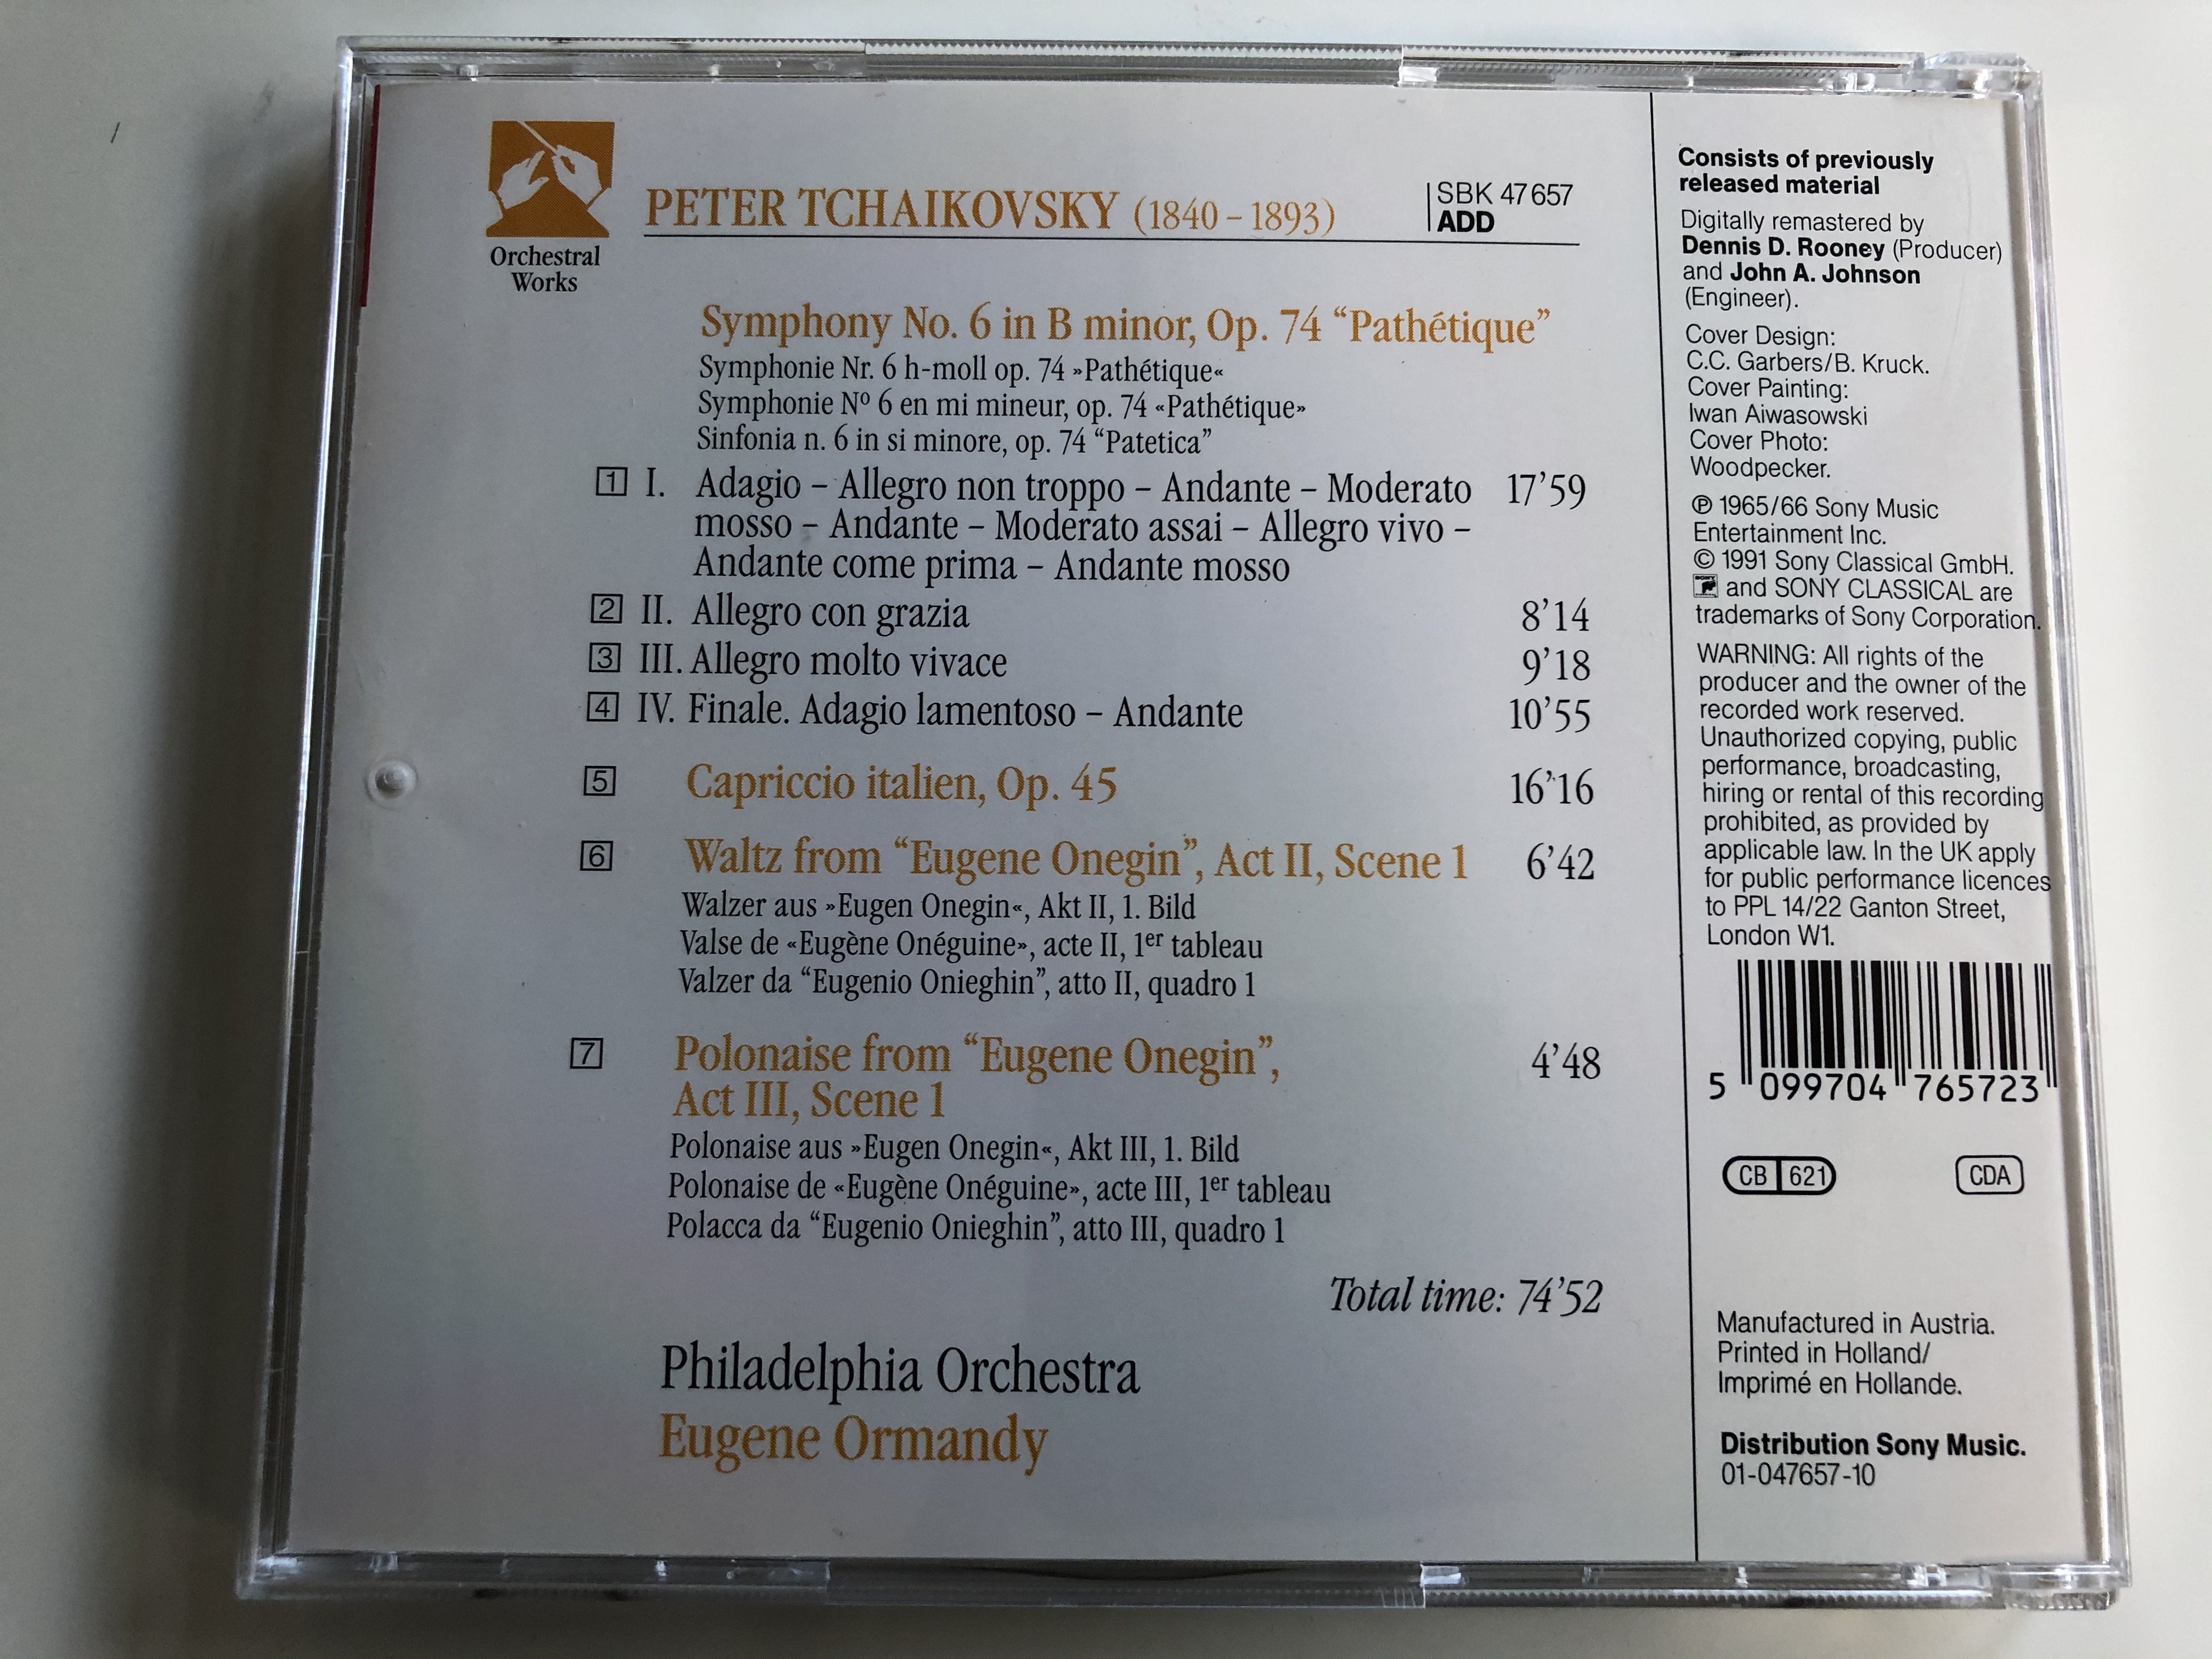 tchaikovsky-symphony-no.-6-path-tique-capriccio-italien-waltz-and-polonaise-from-eugene-onegin-philadelphia-orchestra-eugene-ormandy-sony-classical-audio-cd-sbk-47657-8-.jpg